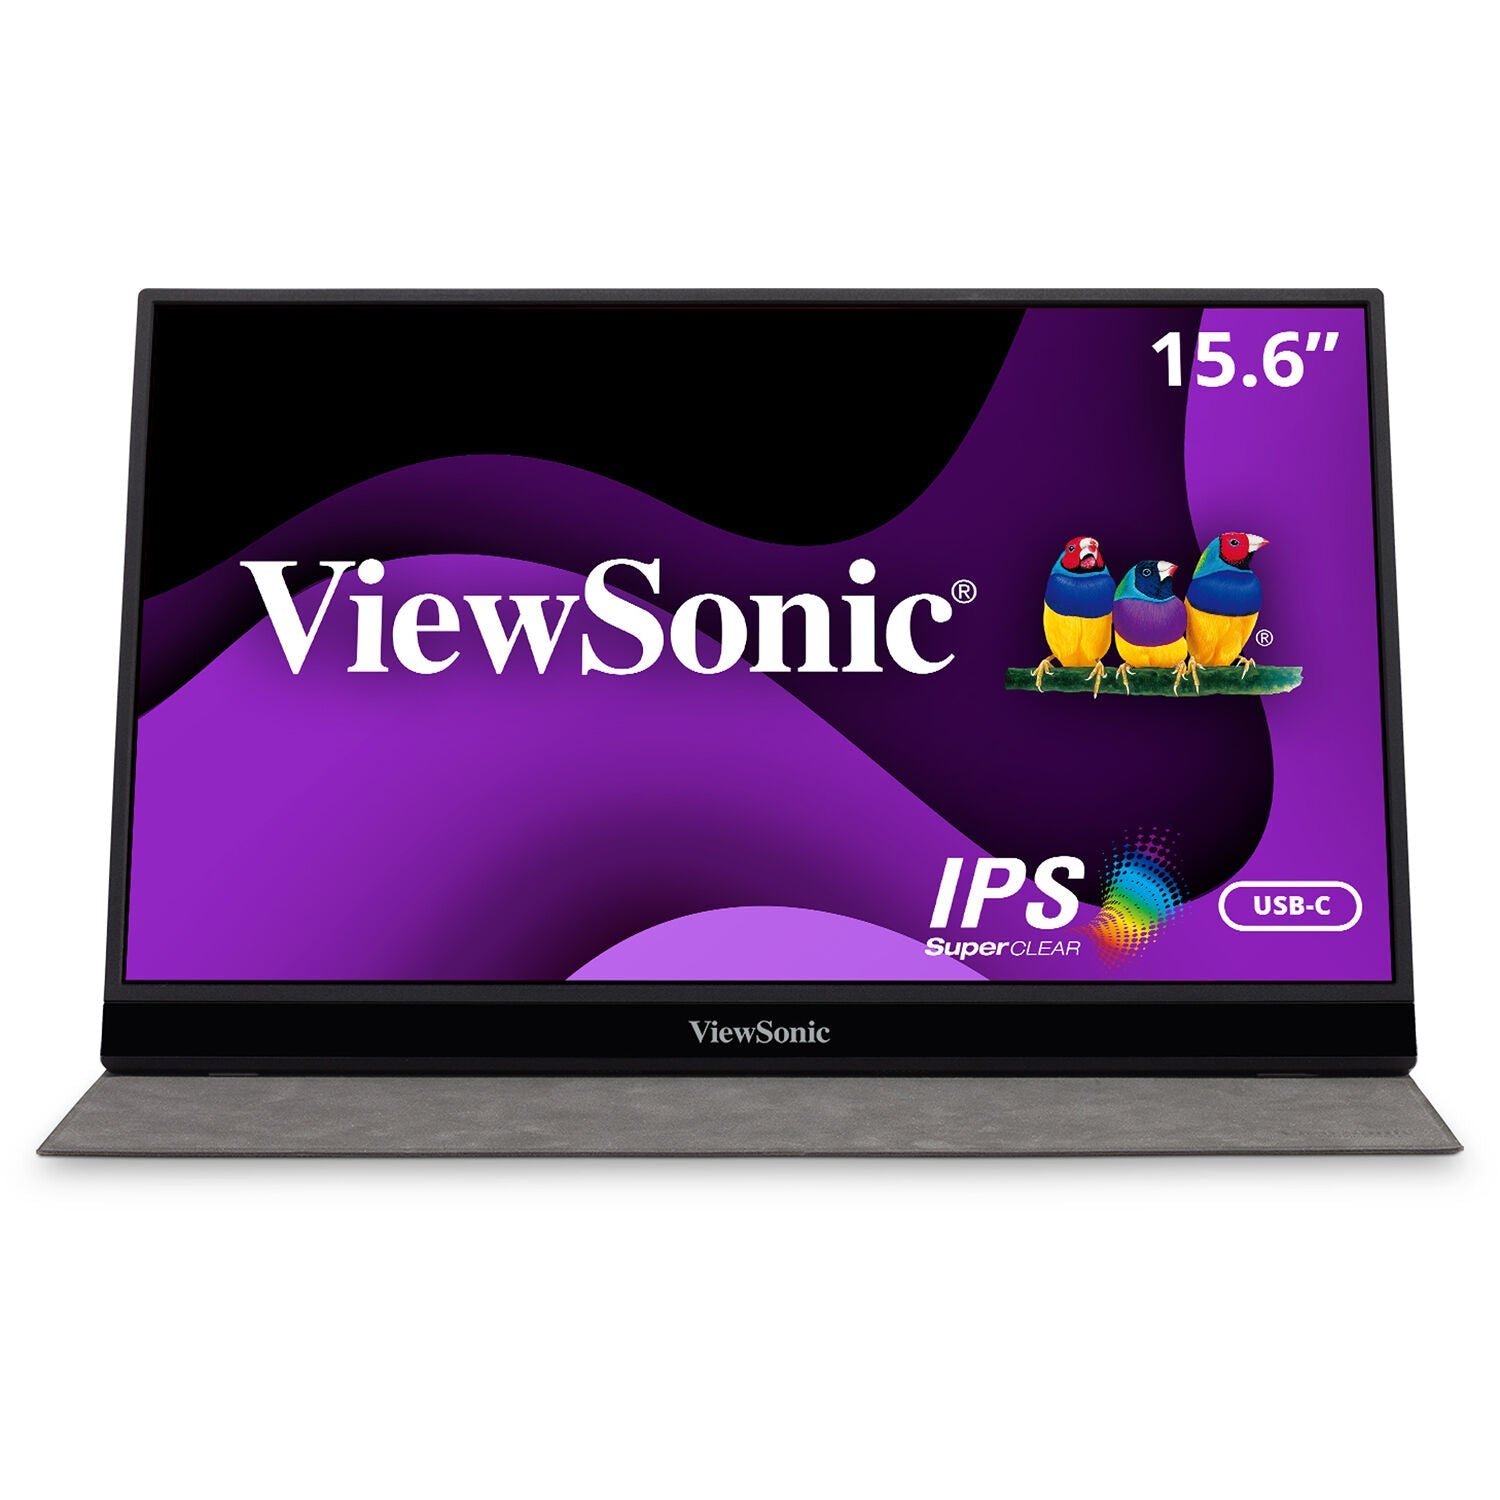 ViewSonic VG1655-R 15.6" 16:9 Portable IPS Monitor - Certified Refurbished